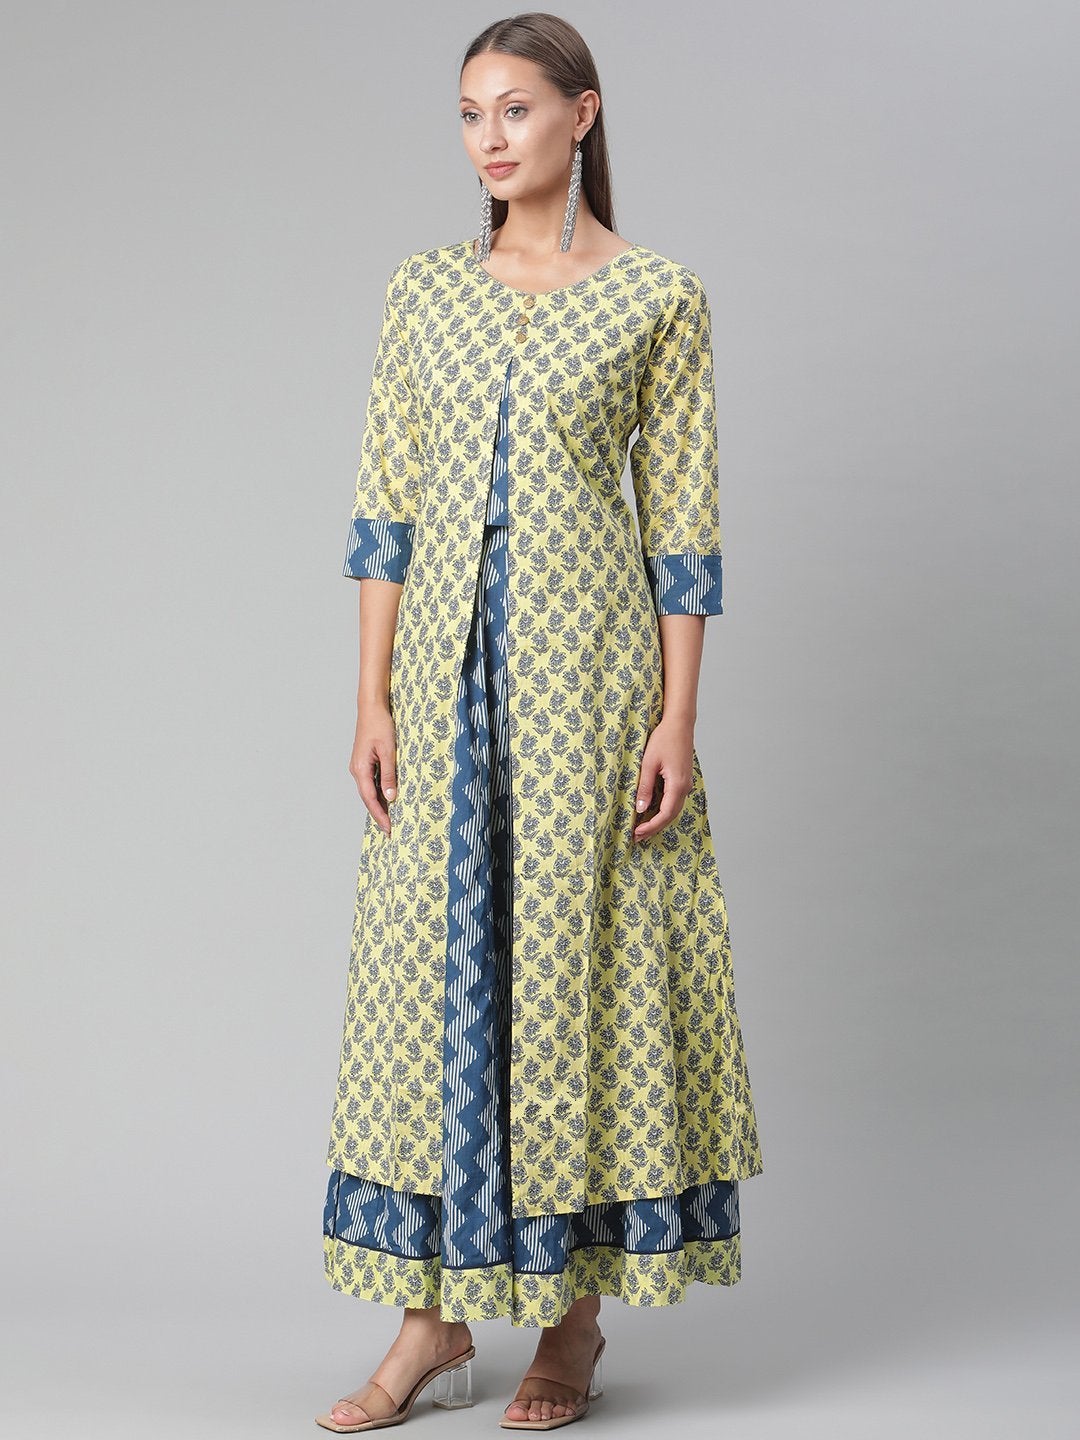 Women's The Dressify Yellow Shurg Style Cotton kurta with Skirt - Divena